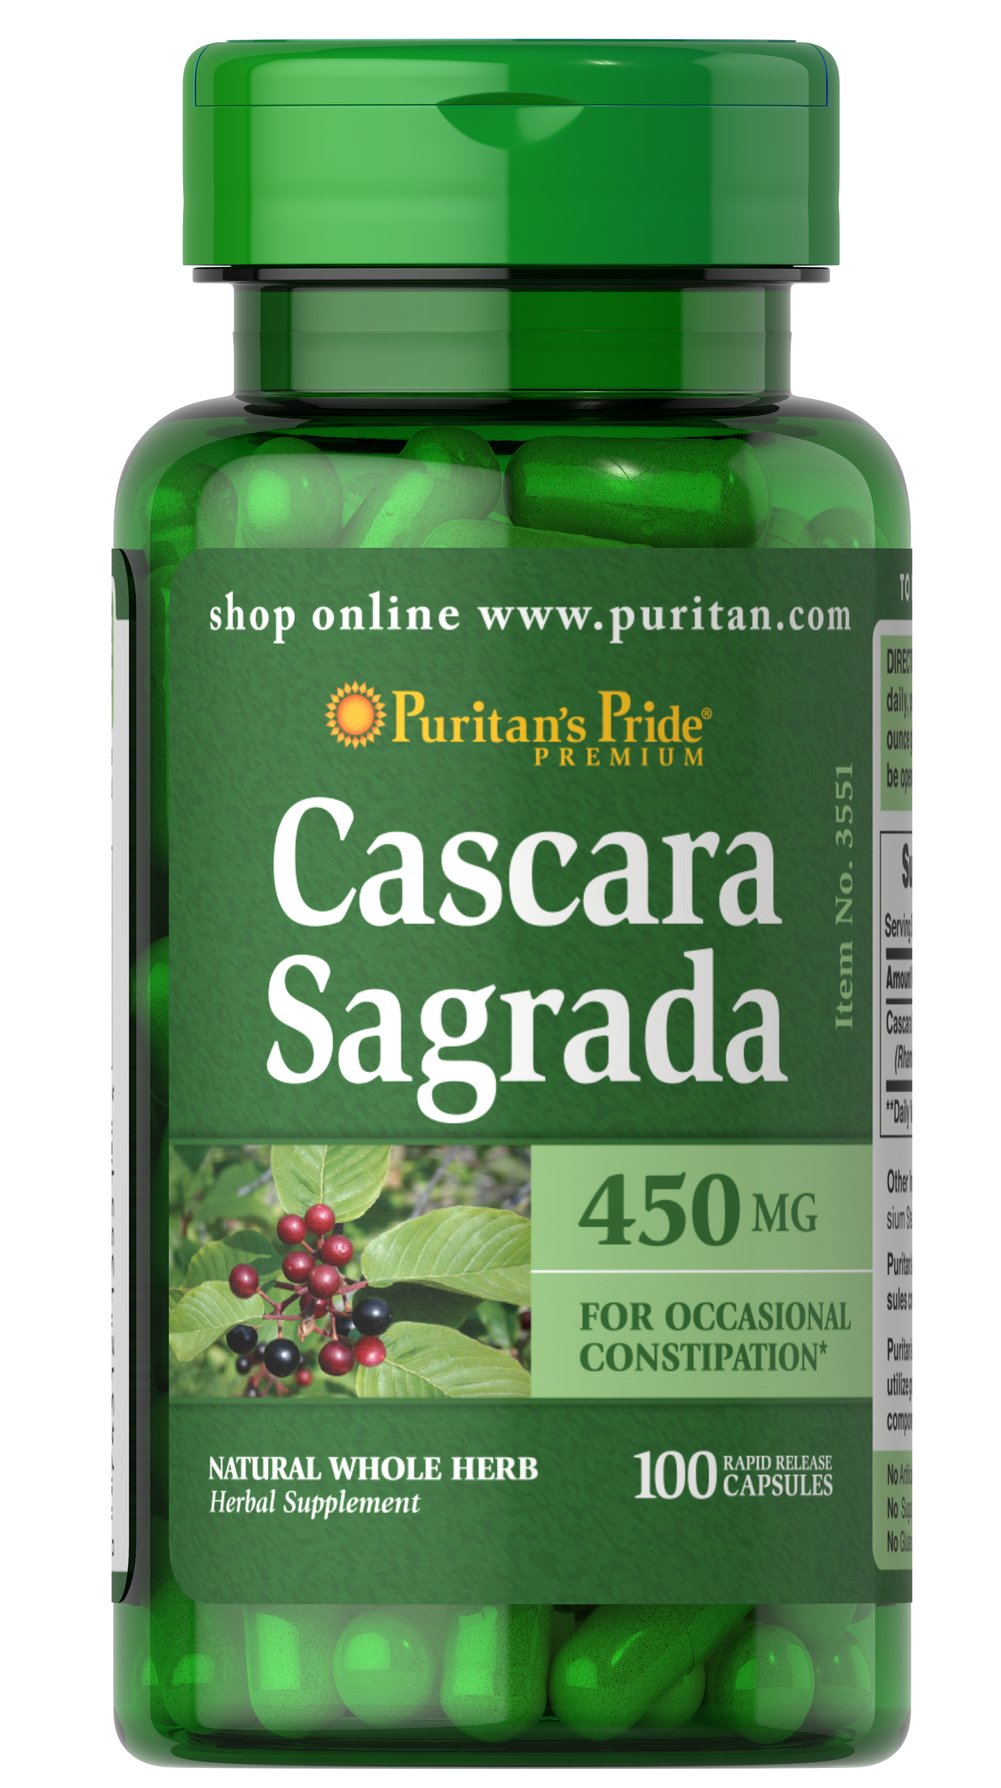 PURITAN’S PRIDE CASCARA SAGRADA 450MG